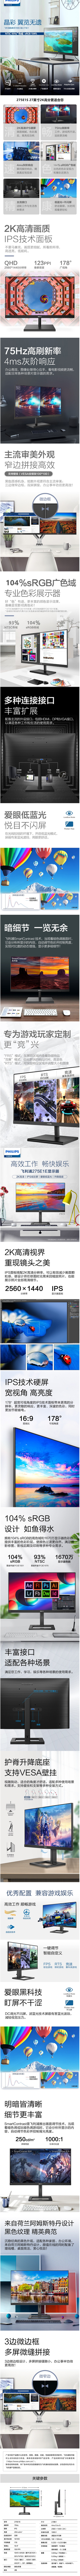 FireShot Pro Webpage Screenshot #002 - '飞利浦 27英寸 275E1S 2K显示器 IPS技术 75Hz刷新 蓝光爱眼不闪屏 电脑显示屏 271E1S【图片 价格 品牌 报价】-京东' - item.jd.com.png